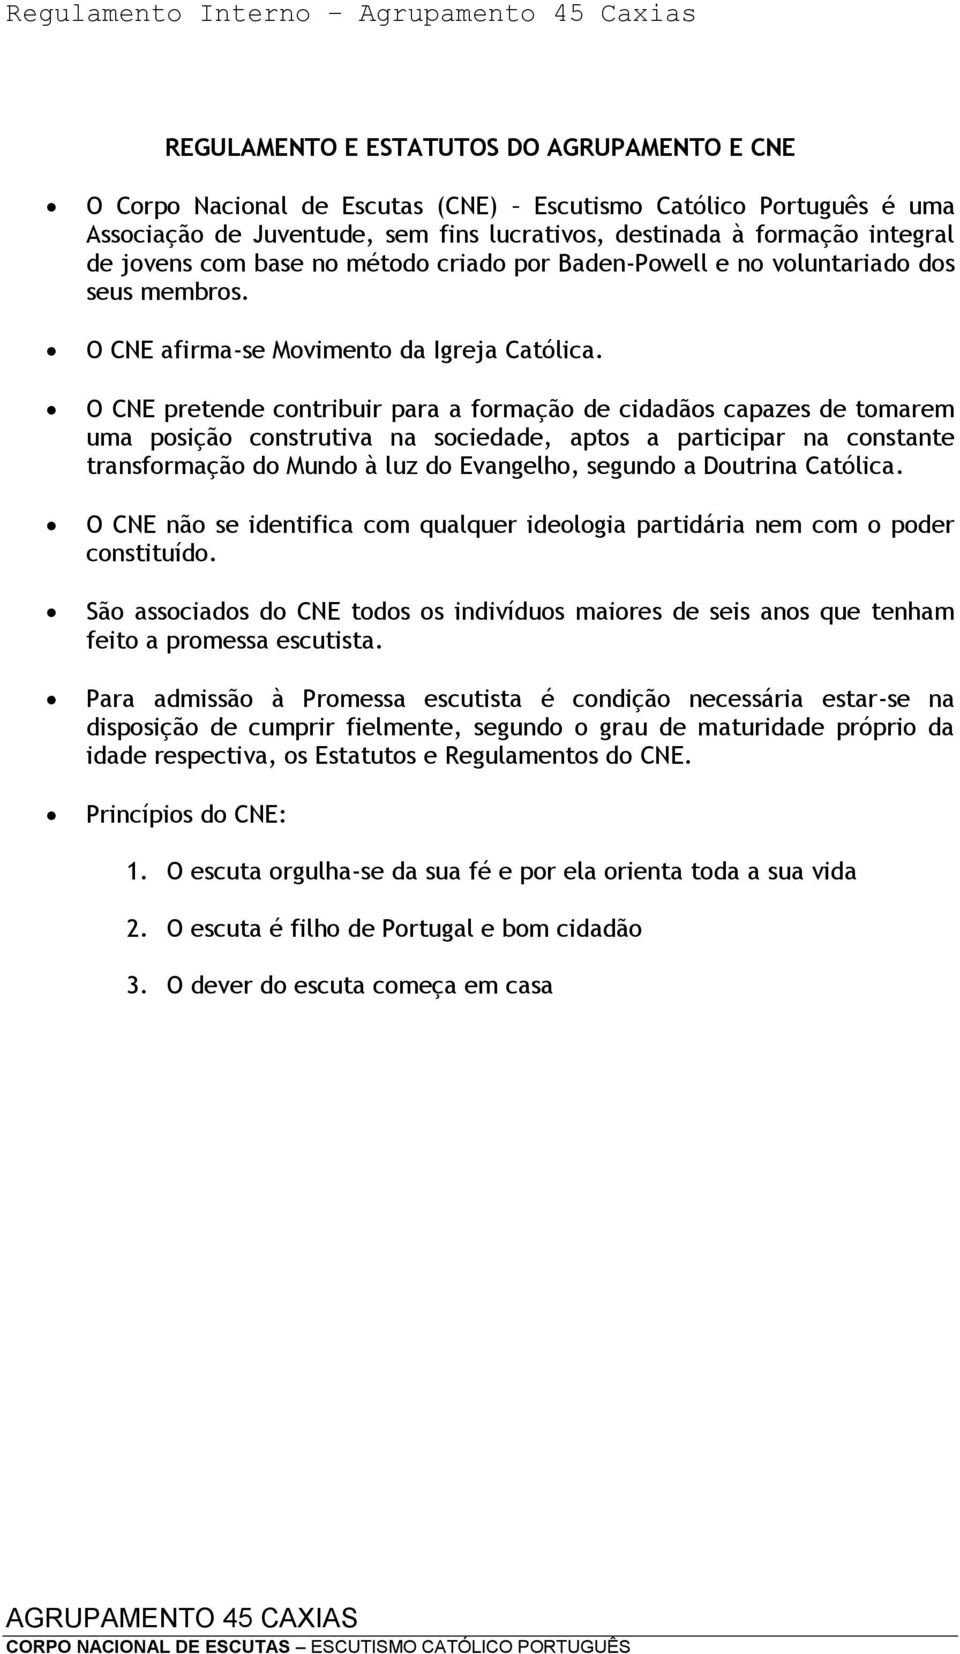 REGULAMENTO DO AGRUPAMENTO 45 CAXIAS - PDF Free Download